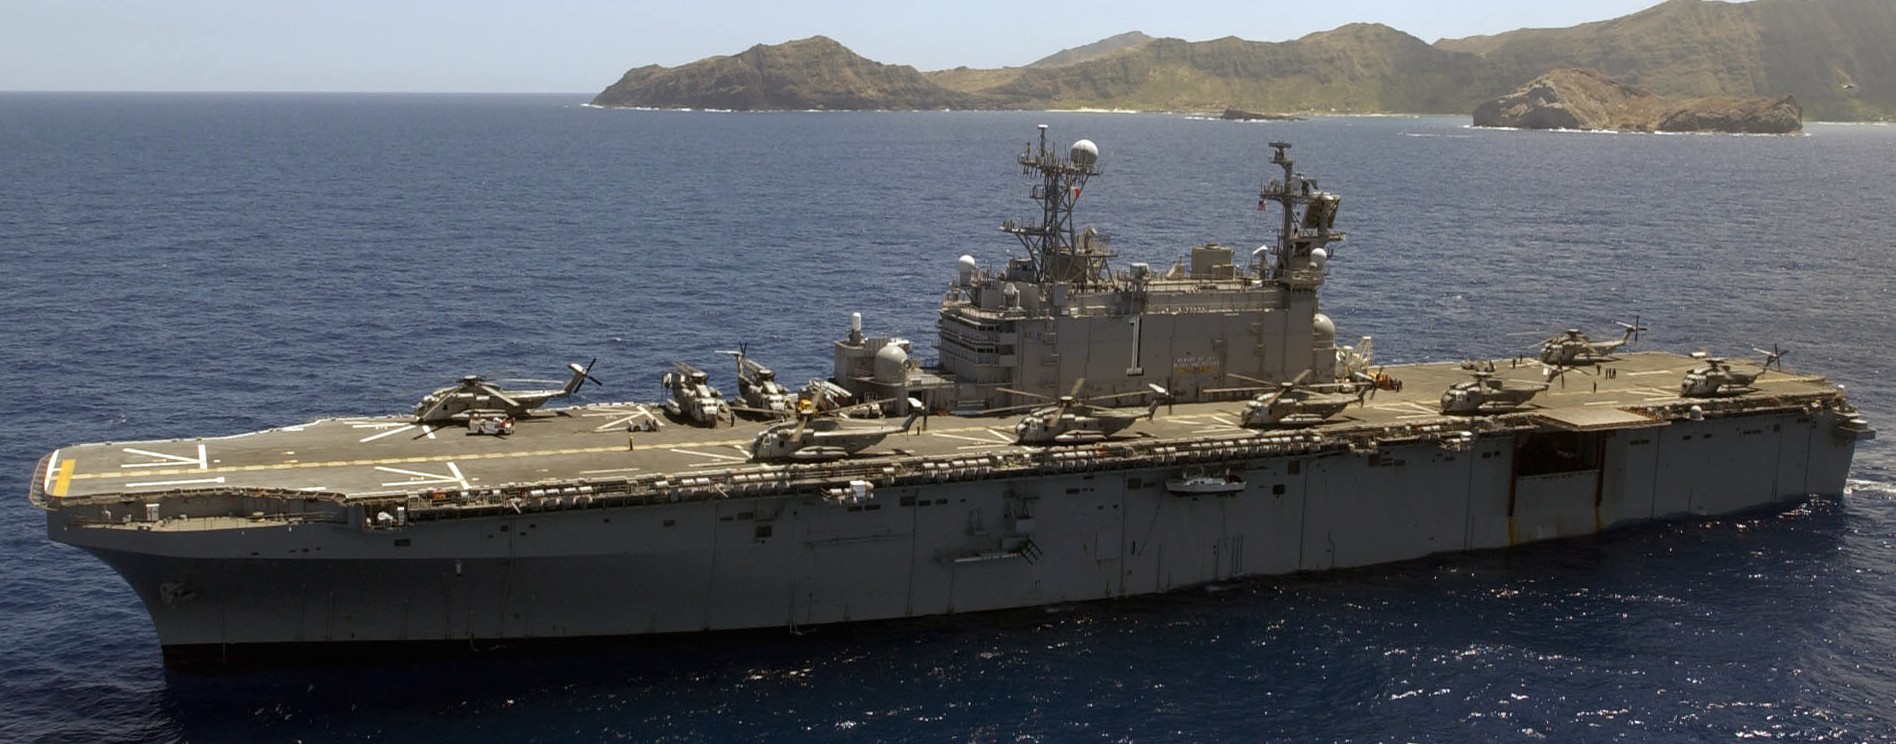 lha-1 uss tarawa amphibious assault ship us navy rimpac 2004 28